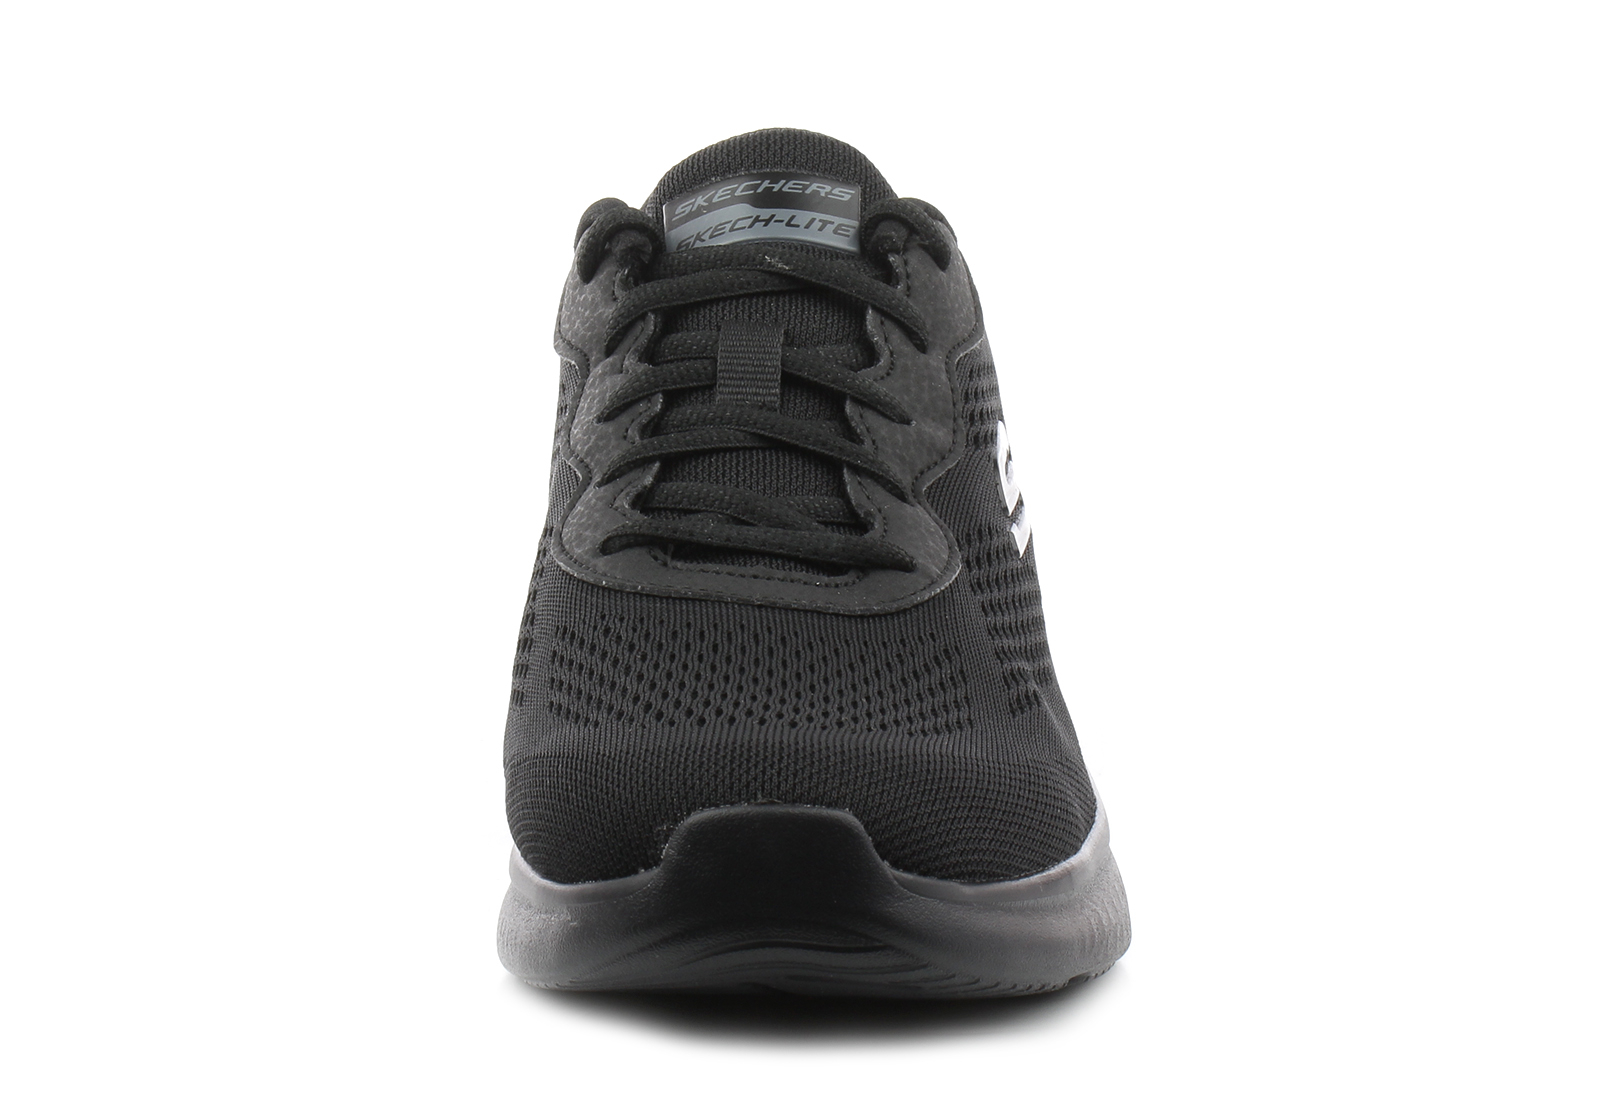 Skechers Sneakers - Skech-lite Pro-perfect Time - 149991-BBK - Online ...